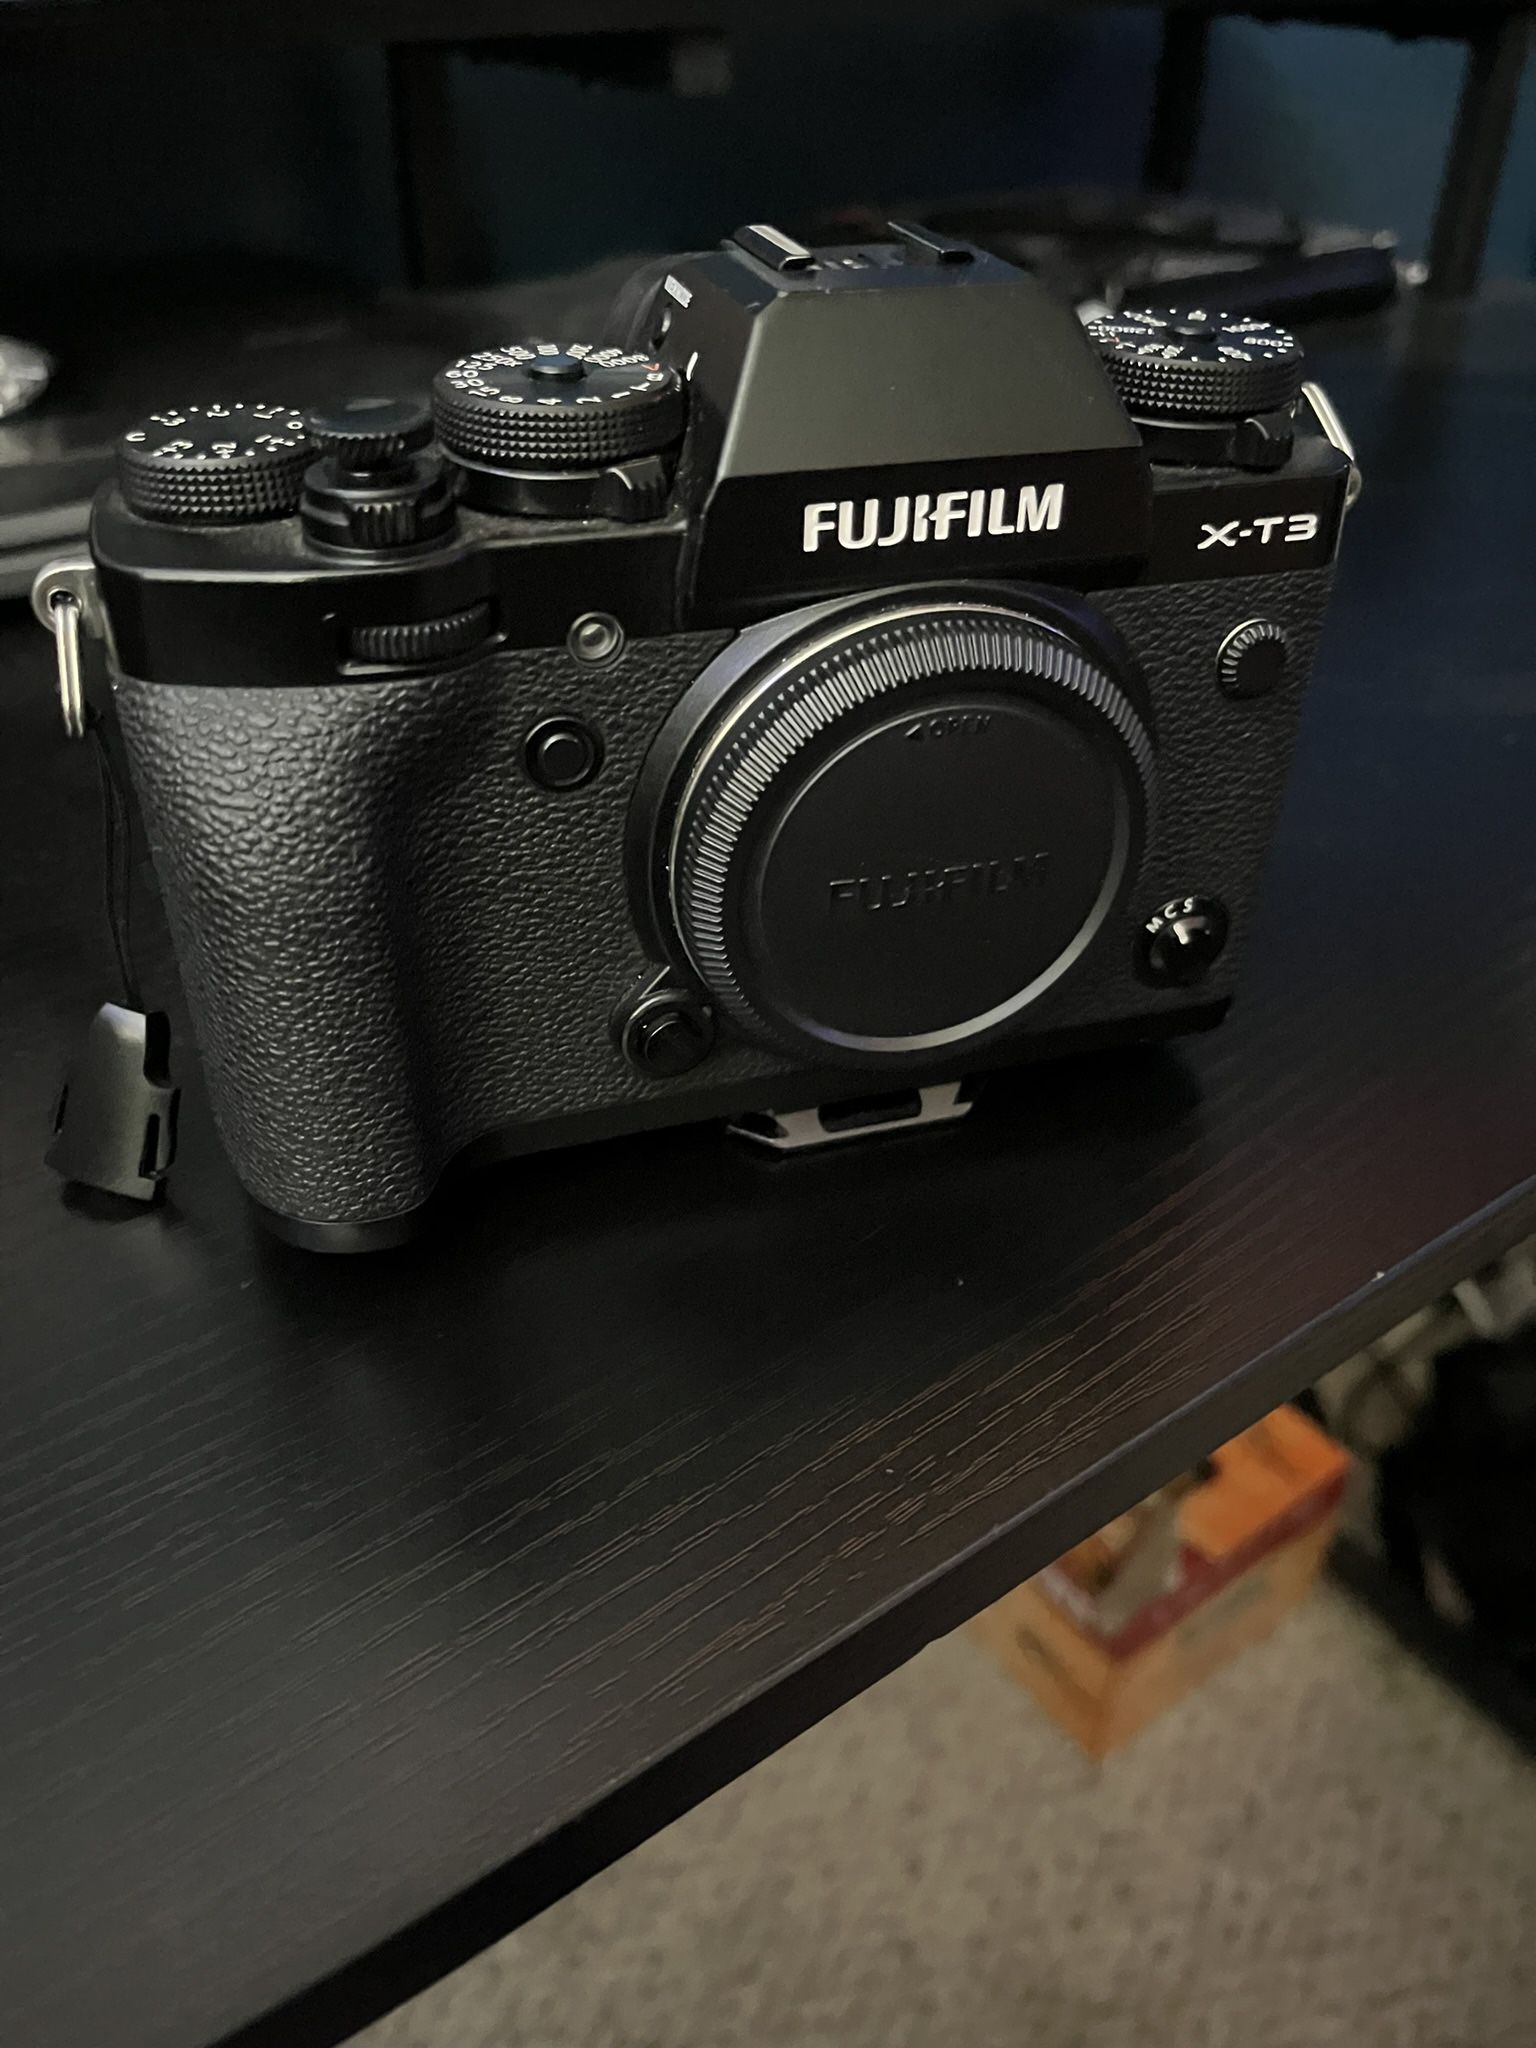 Fujifilm Xt3 (Black) Read Description 